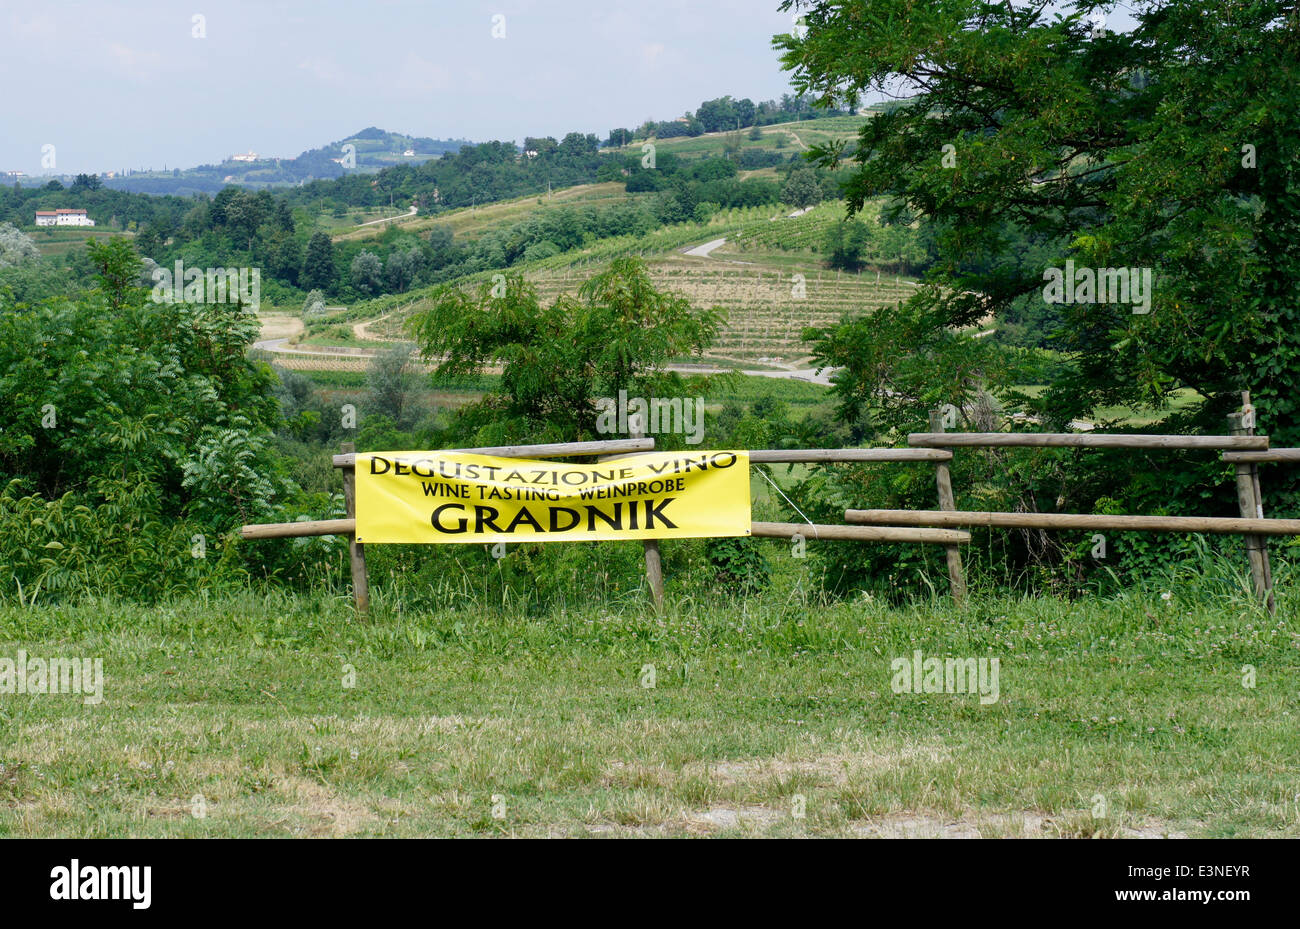 Sign advertising wine tasting in Italian, English and German for Gradnik wine, near Plessiva, Italy Stock Photo